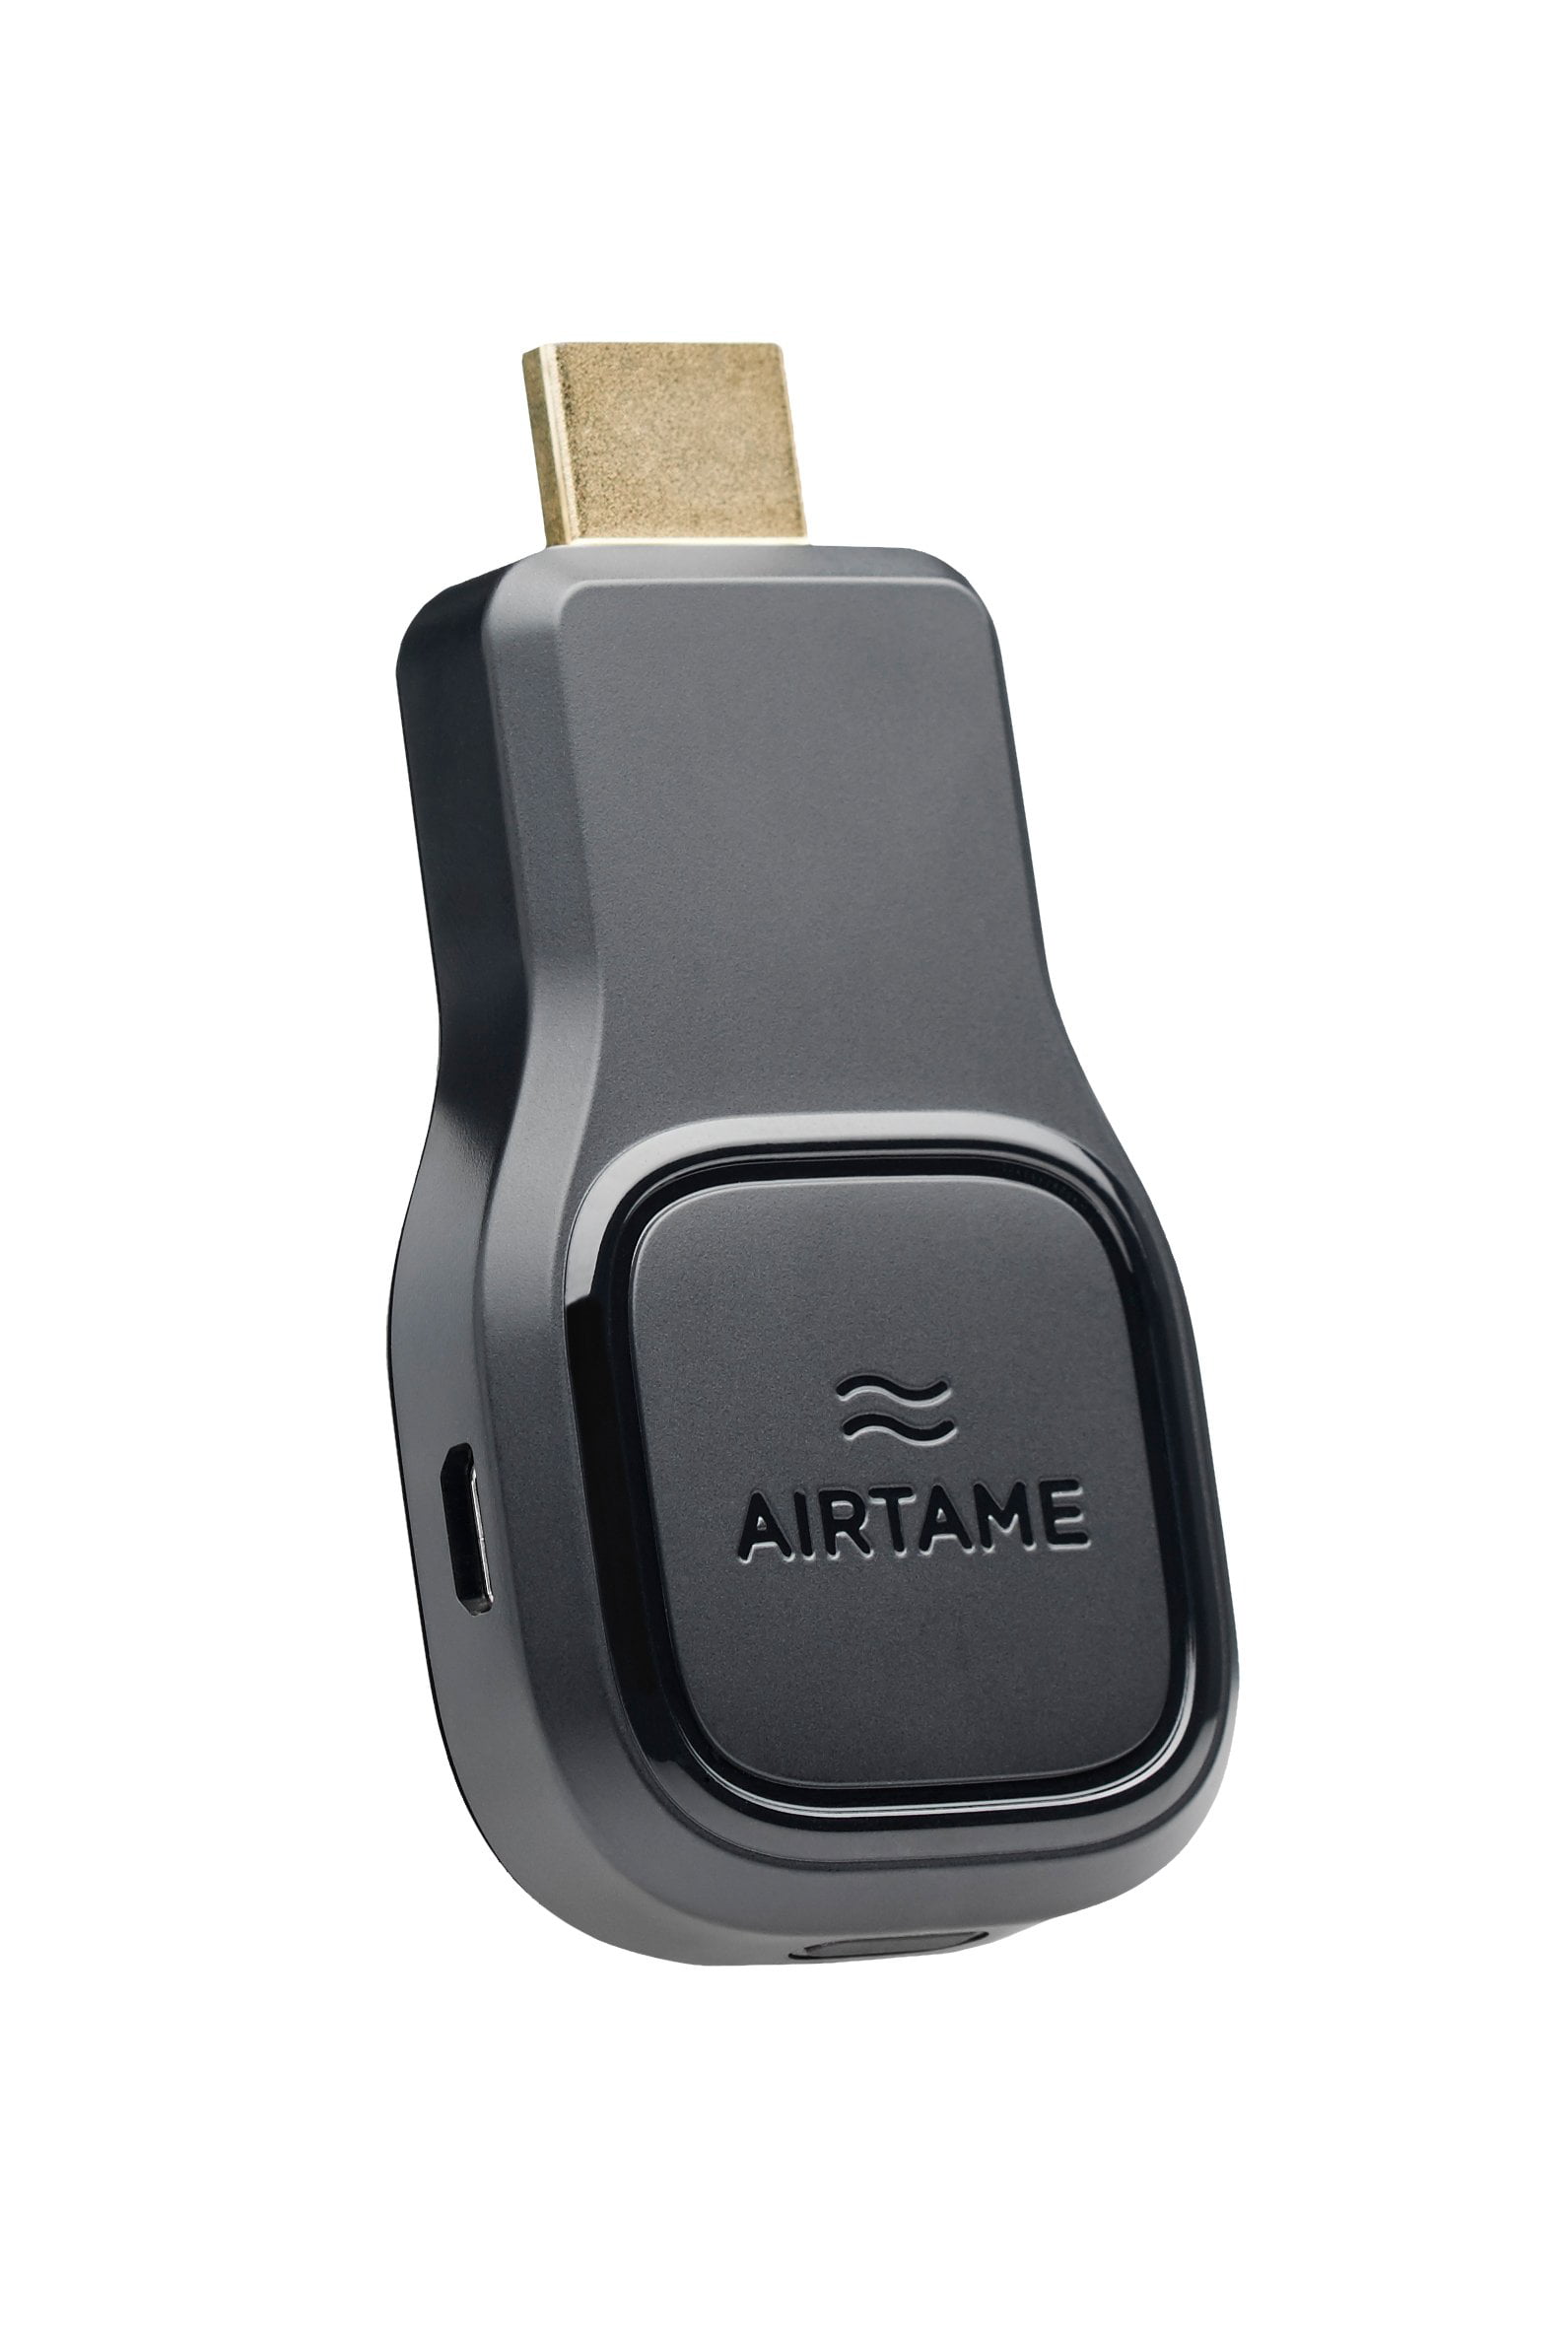 Airtame Wireless HDMI Display & Education Walmart.com